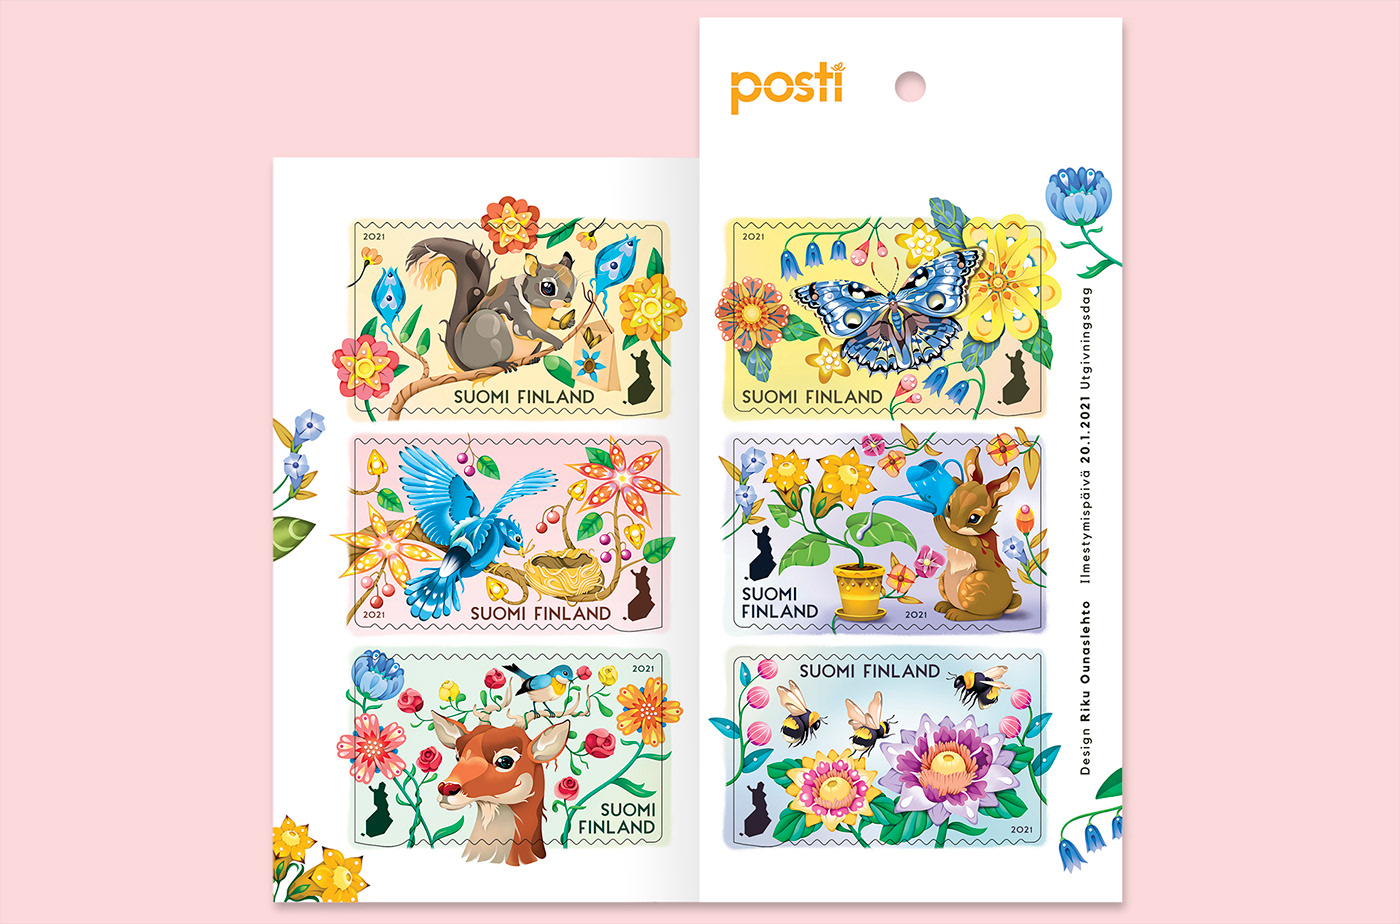 illustrations Illustrator kuvittaja kuvitus Napa Agency Philately riku ounaslehto stamp stamps